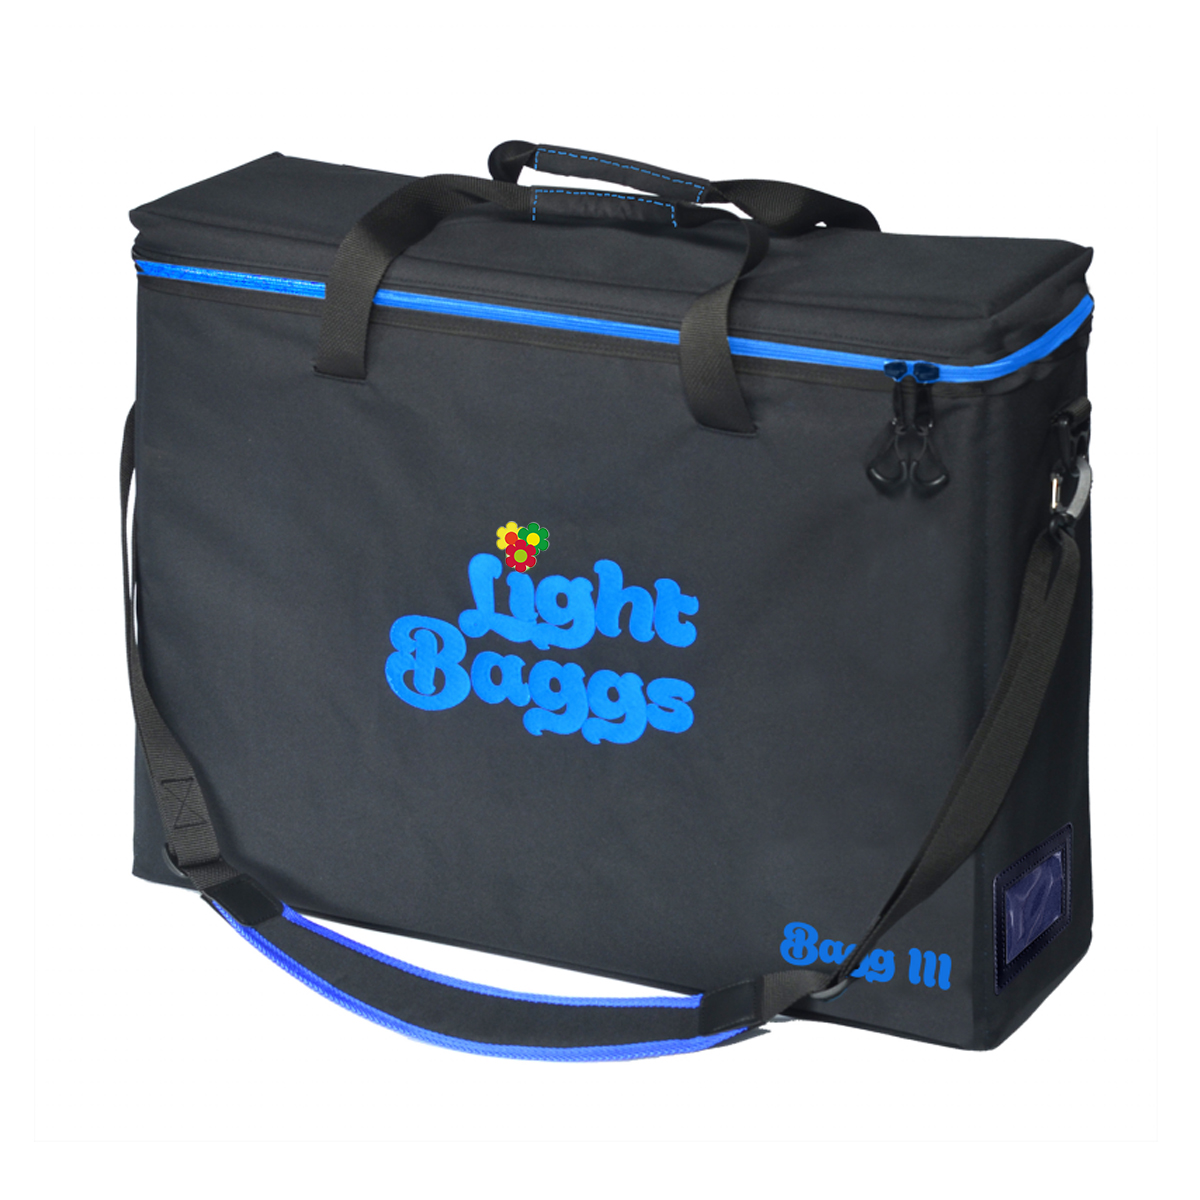 LightBaggs BAGG 3 with Zipper